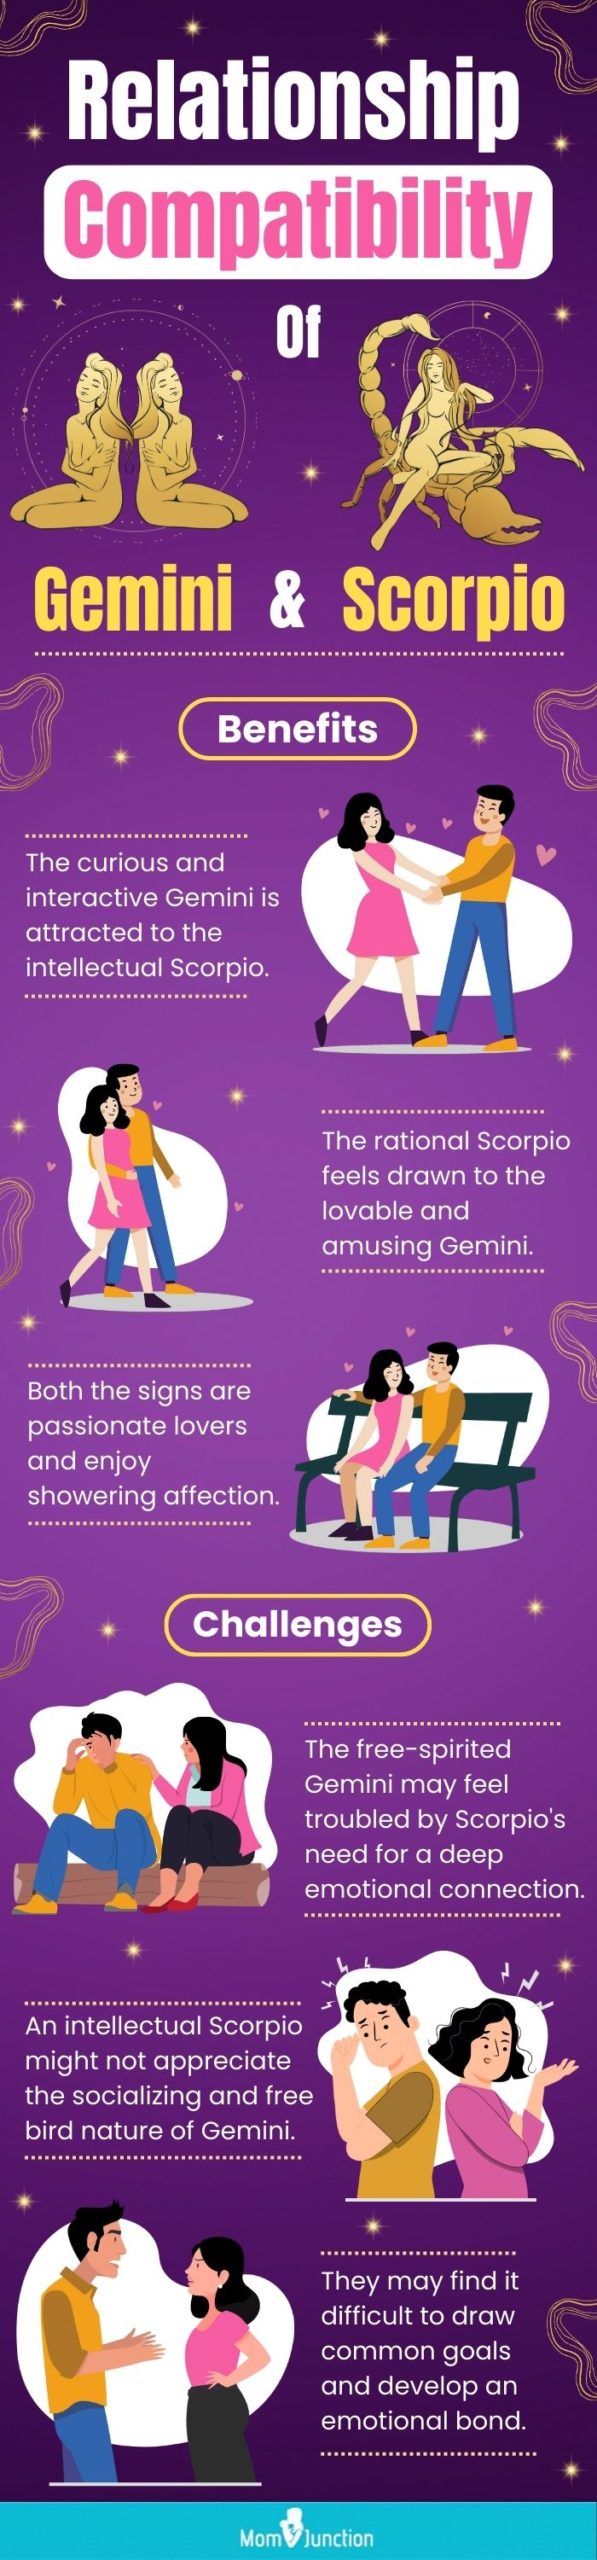 relationship compatibility of gemini and scorpio (infographic)